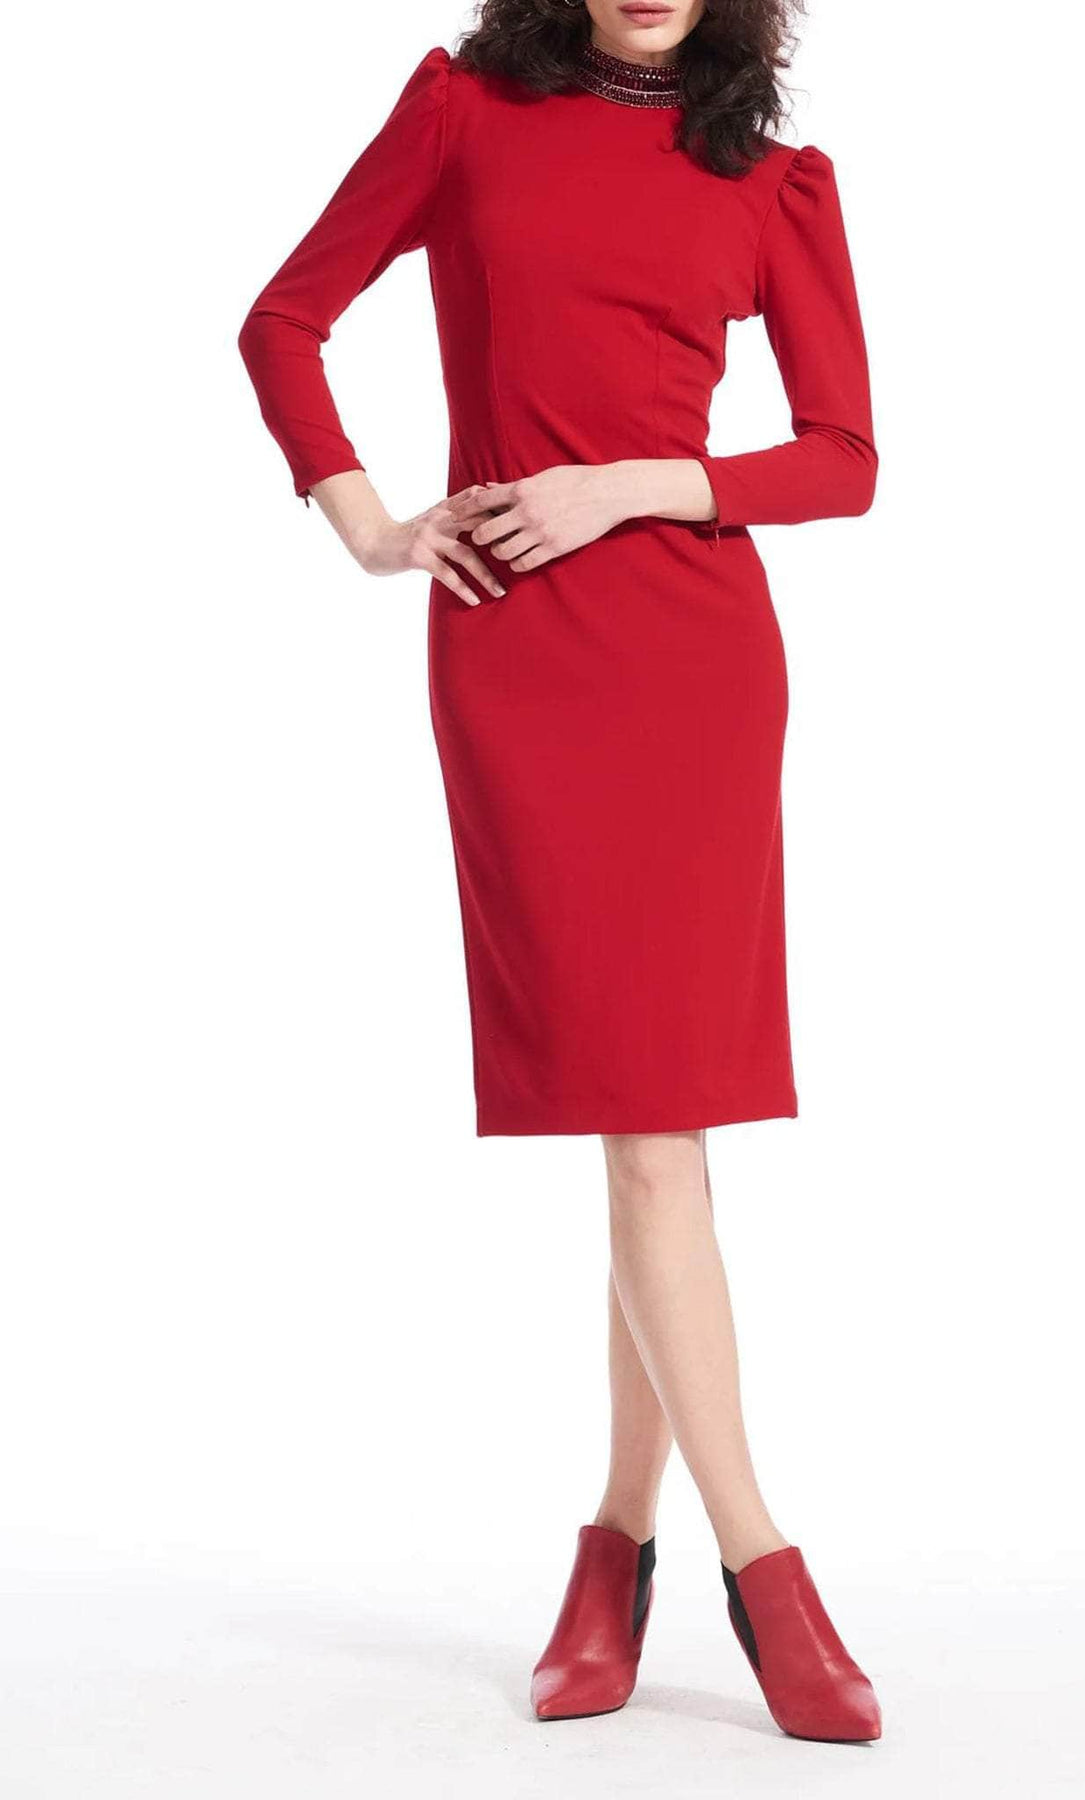 Emily Shalant 17D 0019 - Beaded High Neck Quarter Sleeve Cocktail Dress Semi Formal 0 / Red